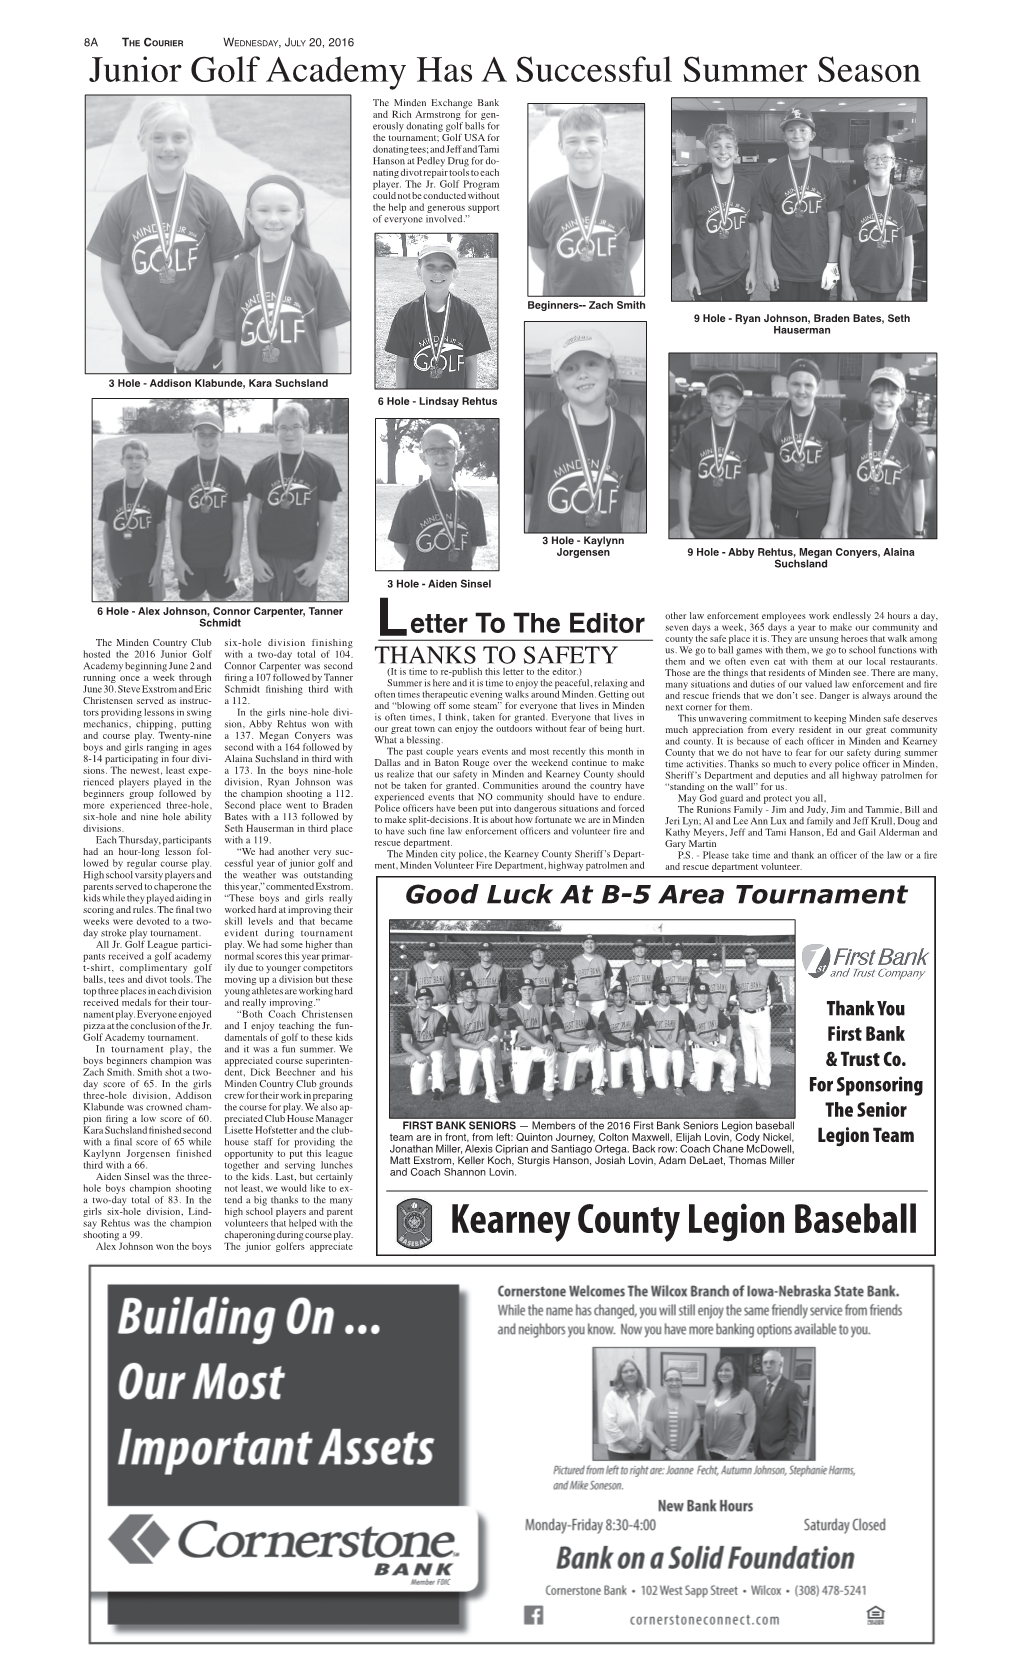 Kearney County Legion Baseball